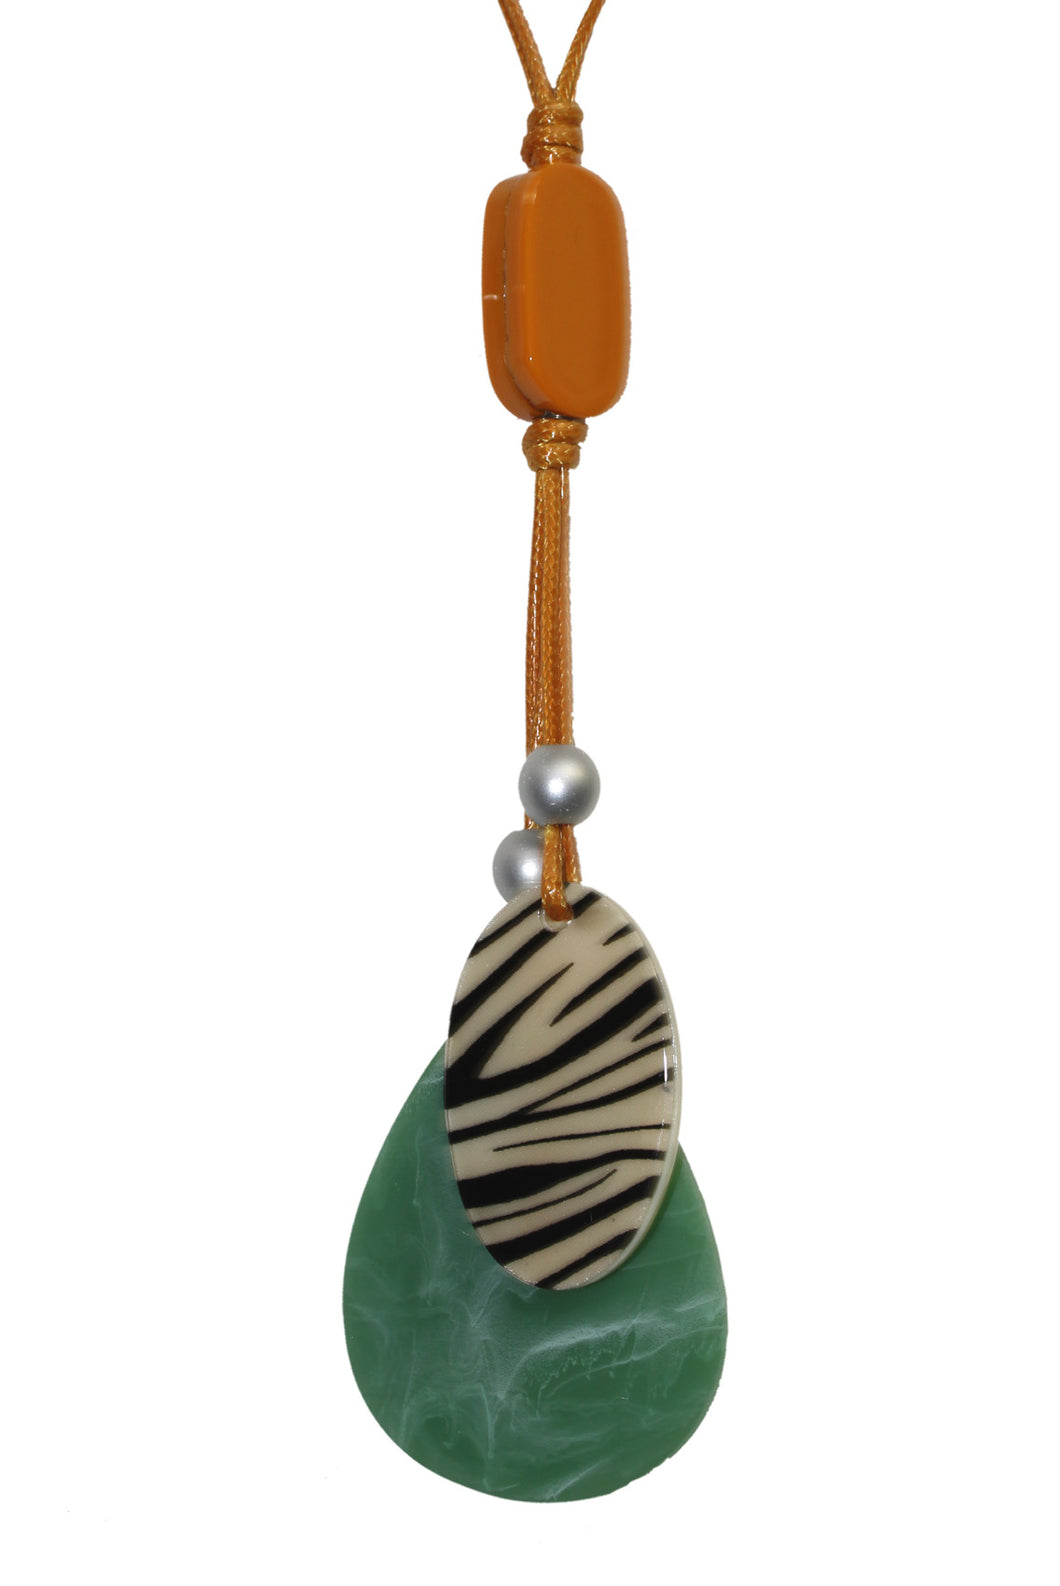 Zebra African inspired resin necklace